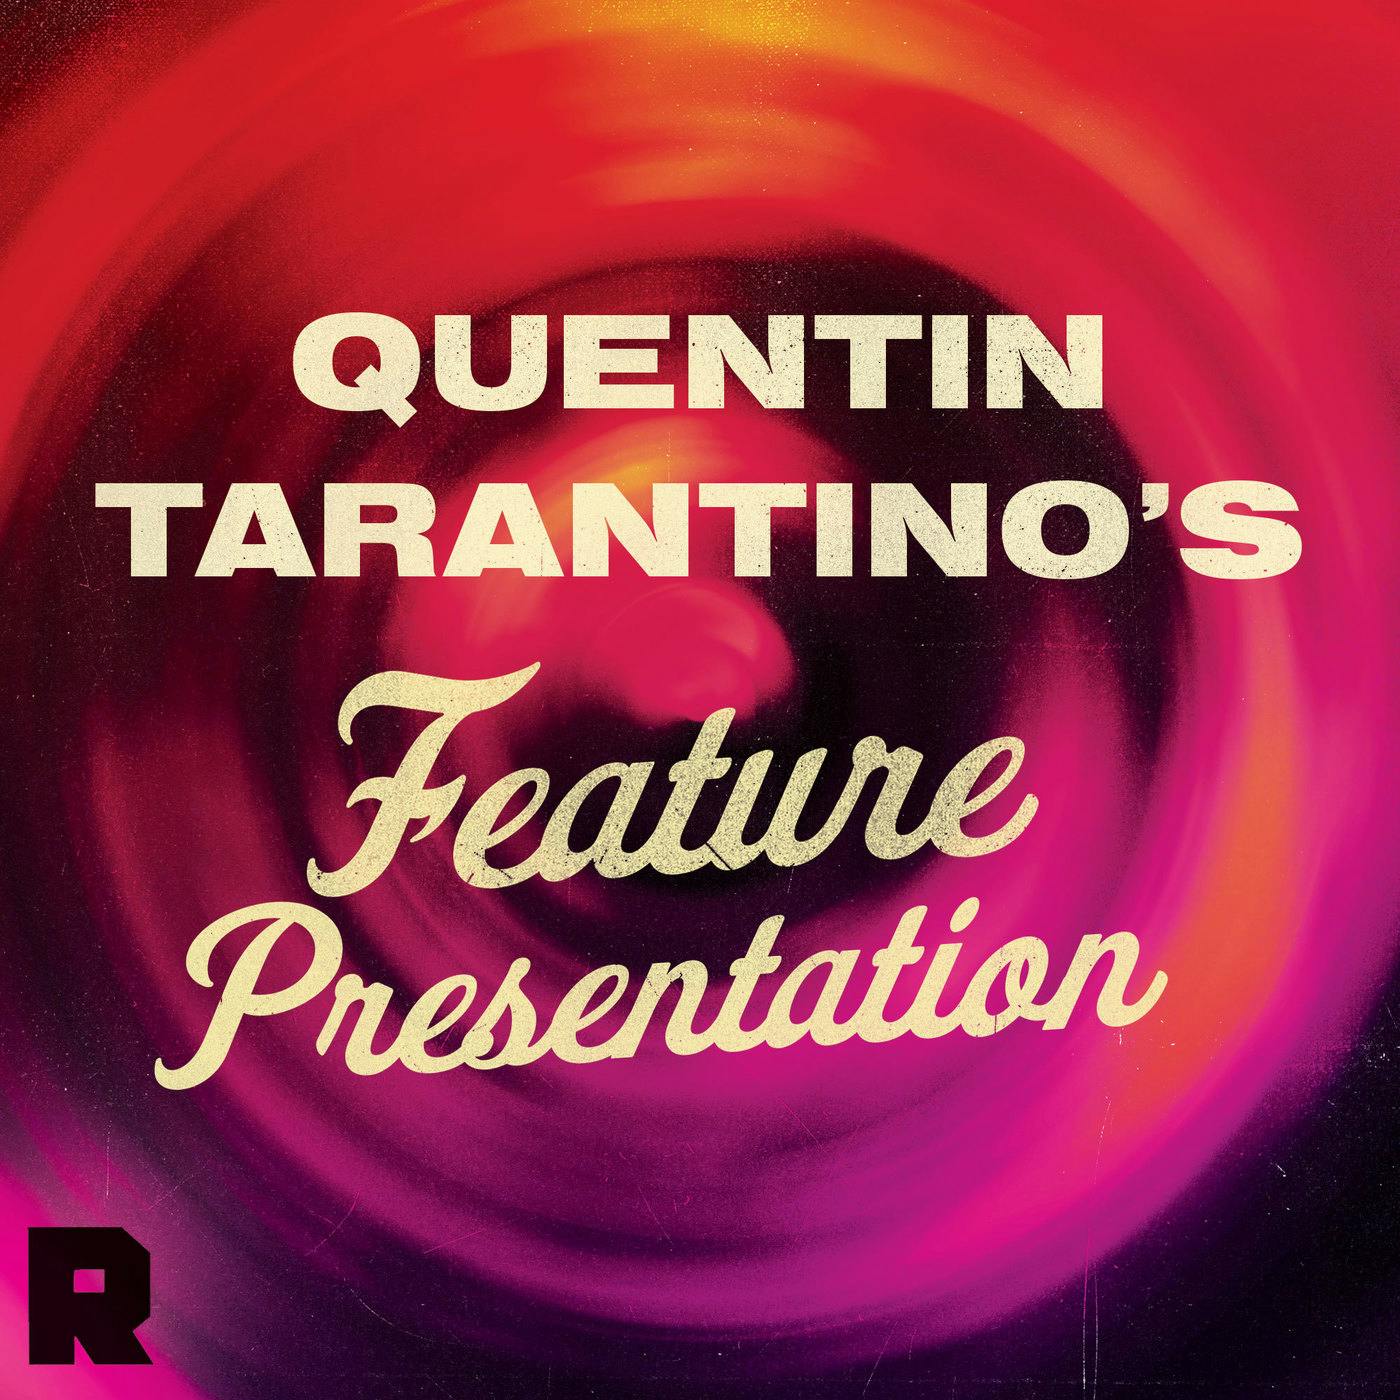 Introducing 'Quentin Tarantino's Feature Presentation'